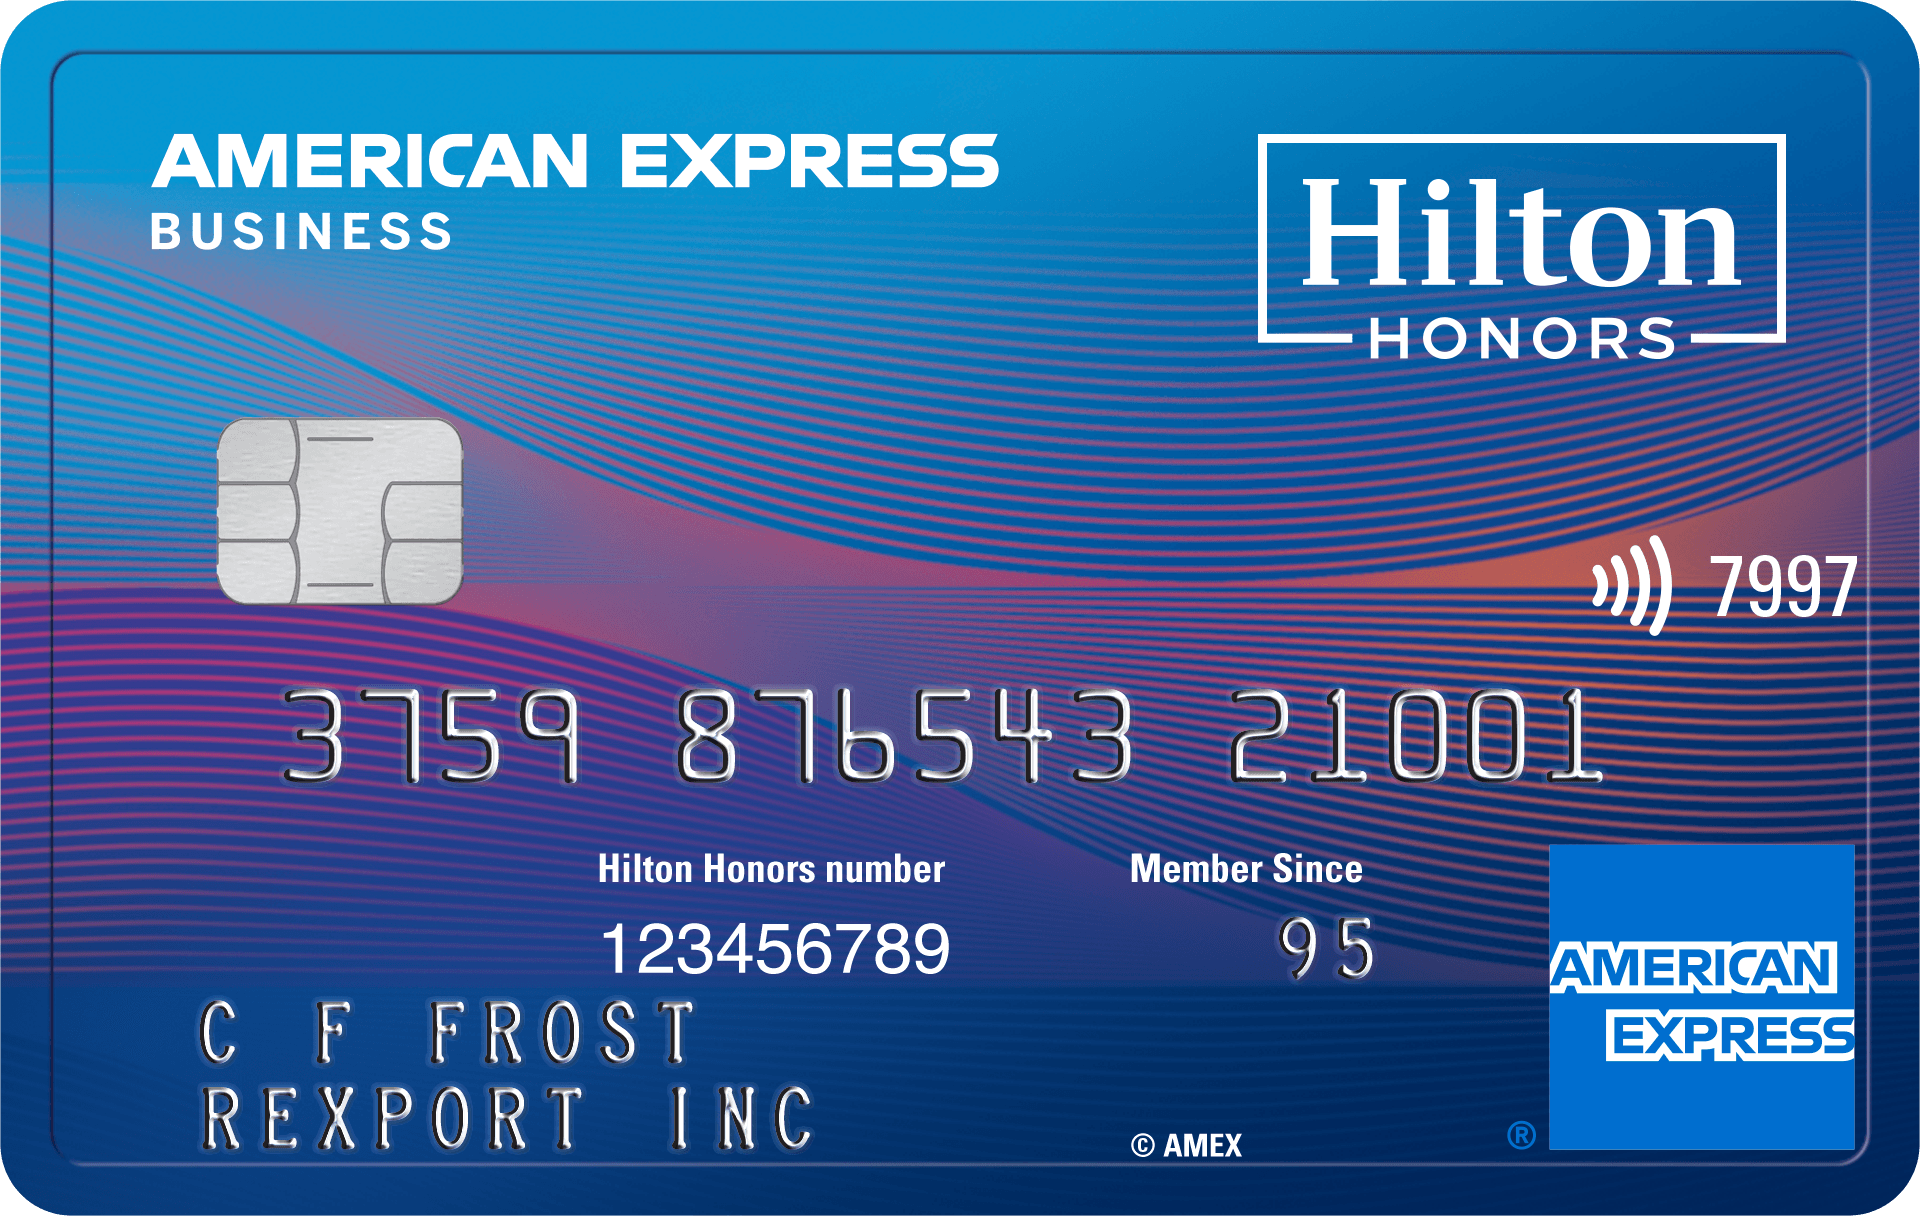 Hilton Honors Business Card, Chip-fähig, mit kontaktloser Bezahlfunktion (Tap to Pay)